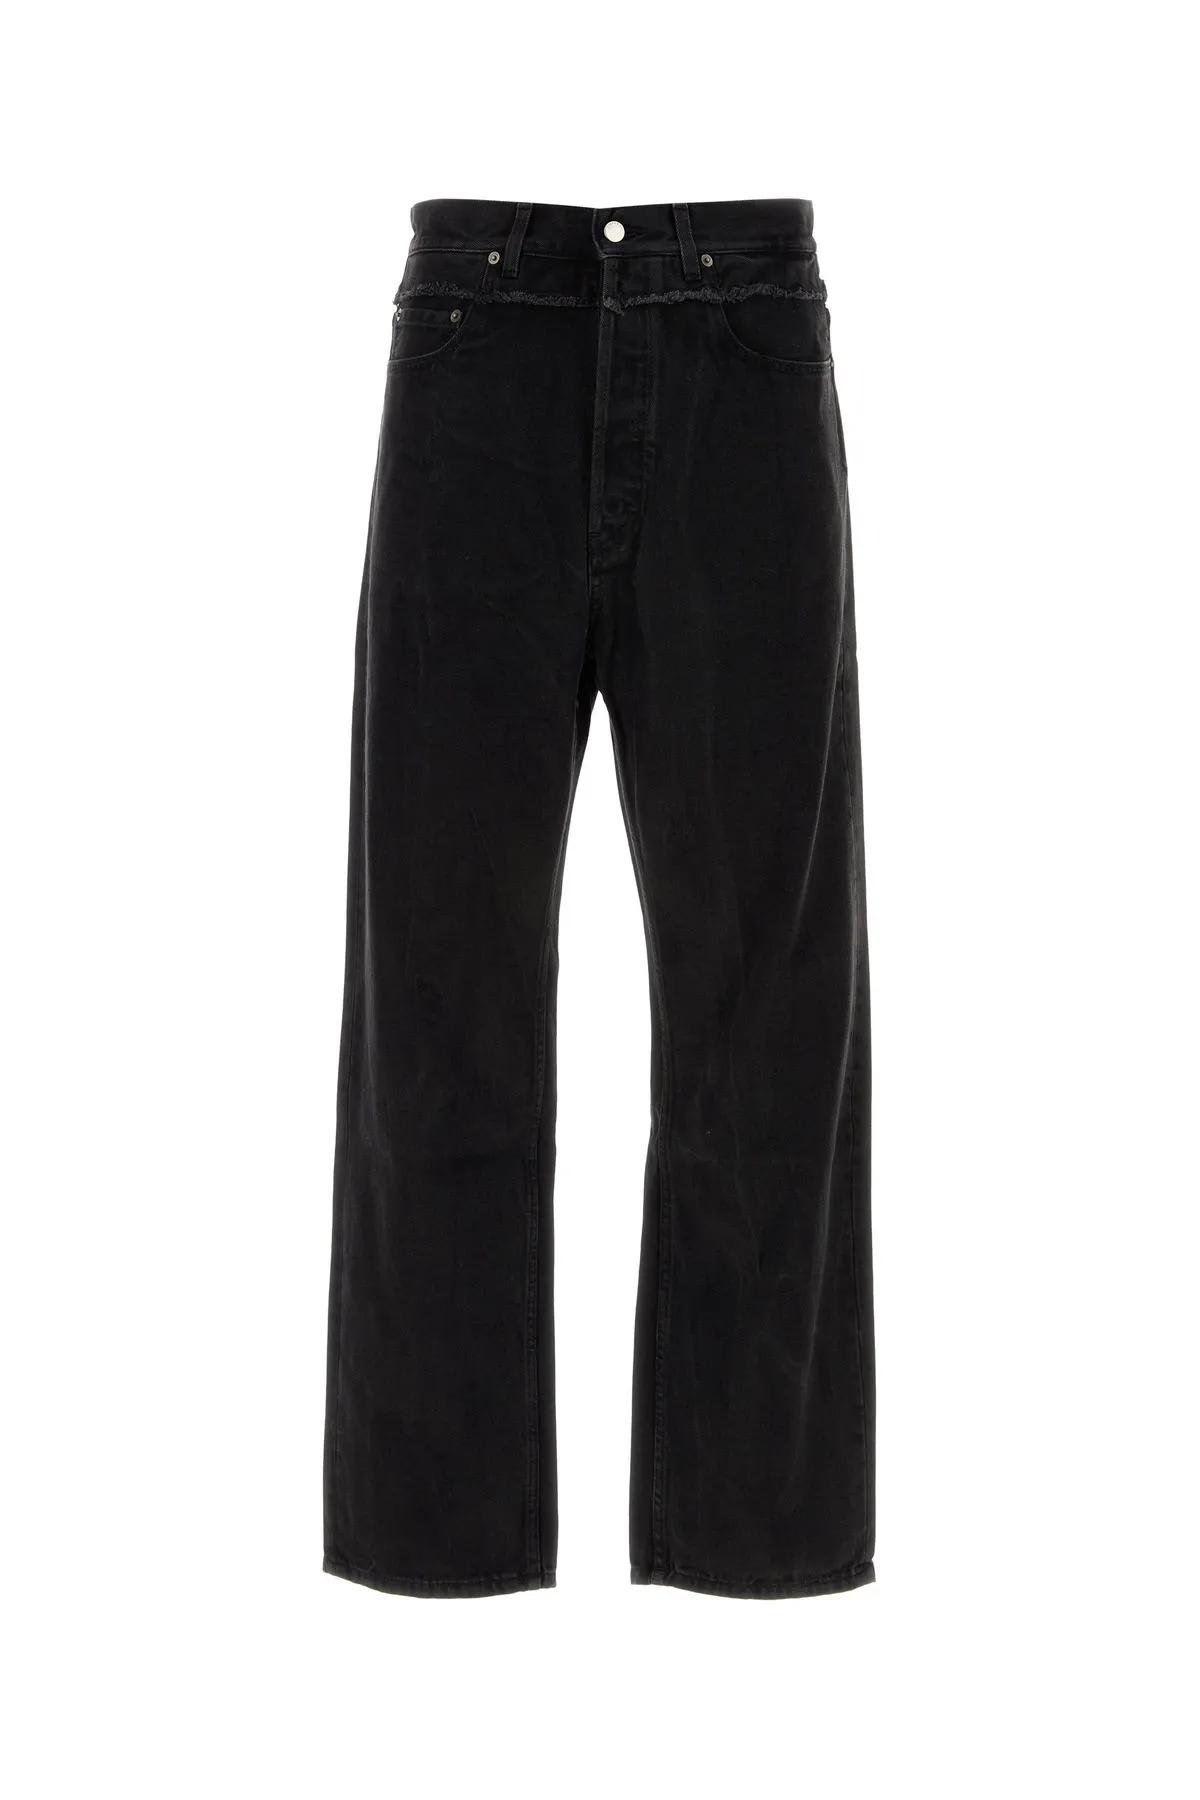 Shop Ambush Black Denim Jeans